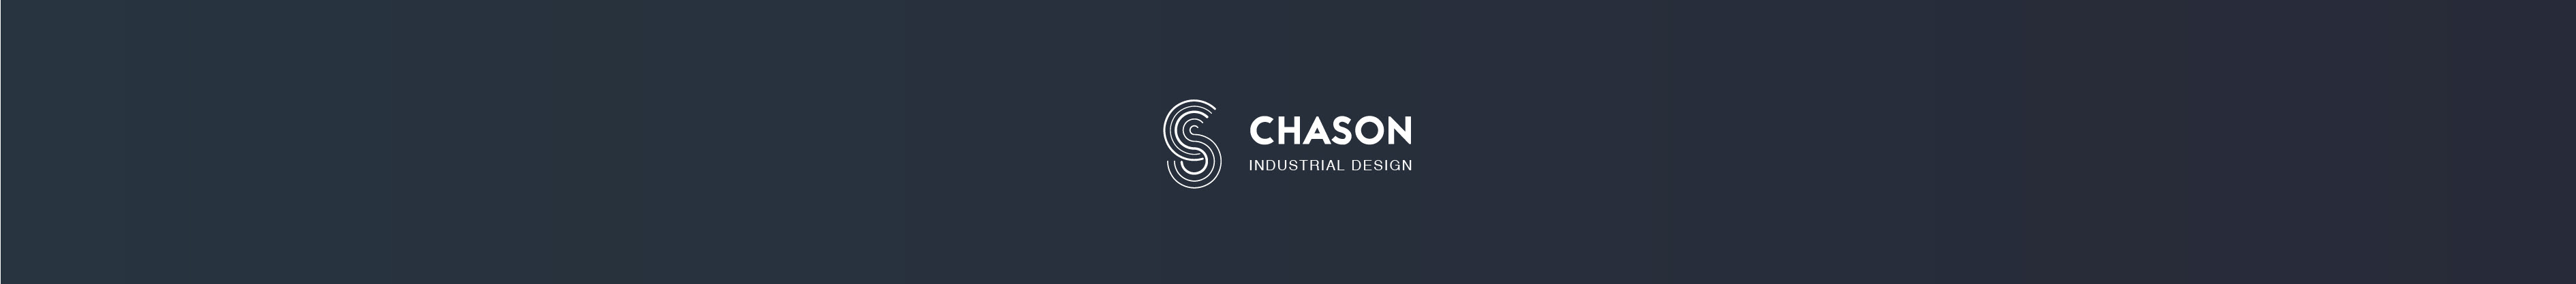 Chason You's profile banner